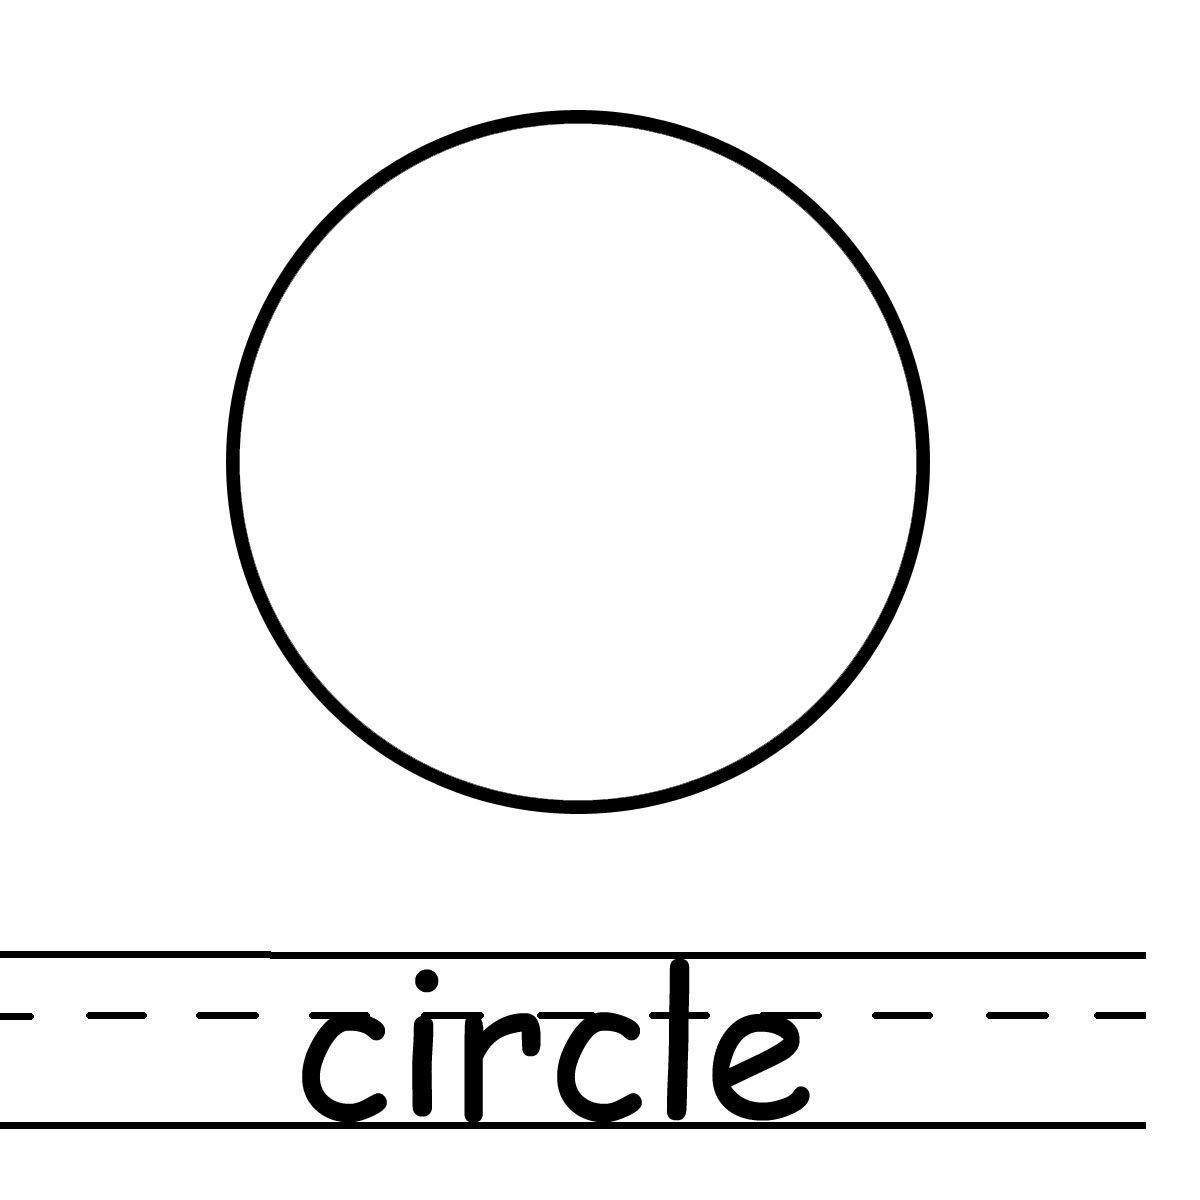 Circle Shape Kid Hd Image Clipart